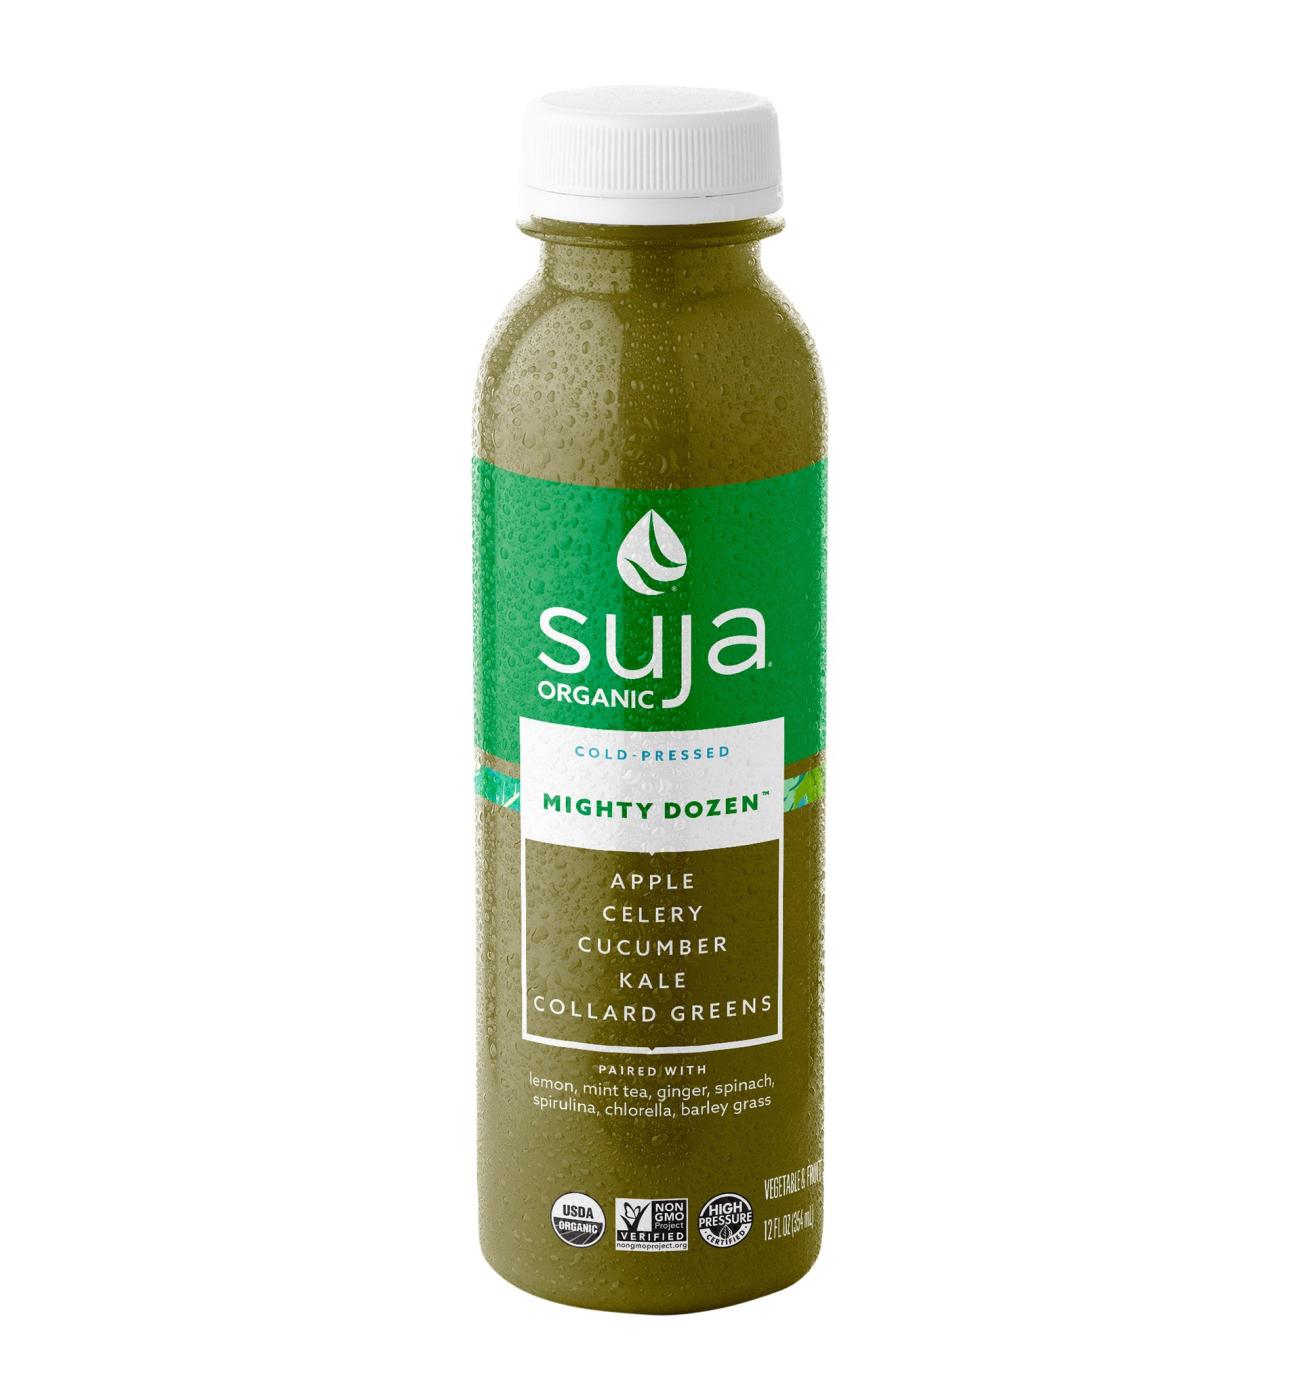 Suja Mighty Dozen Organic Cold-Pressed Juice; image 1 of 2